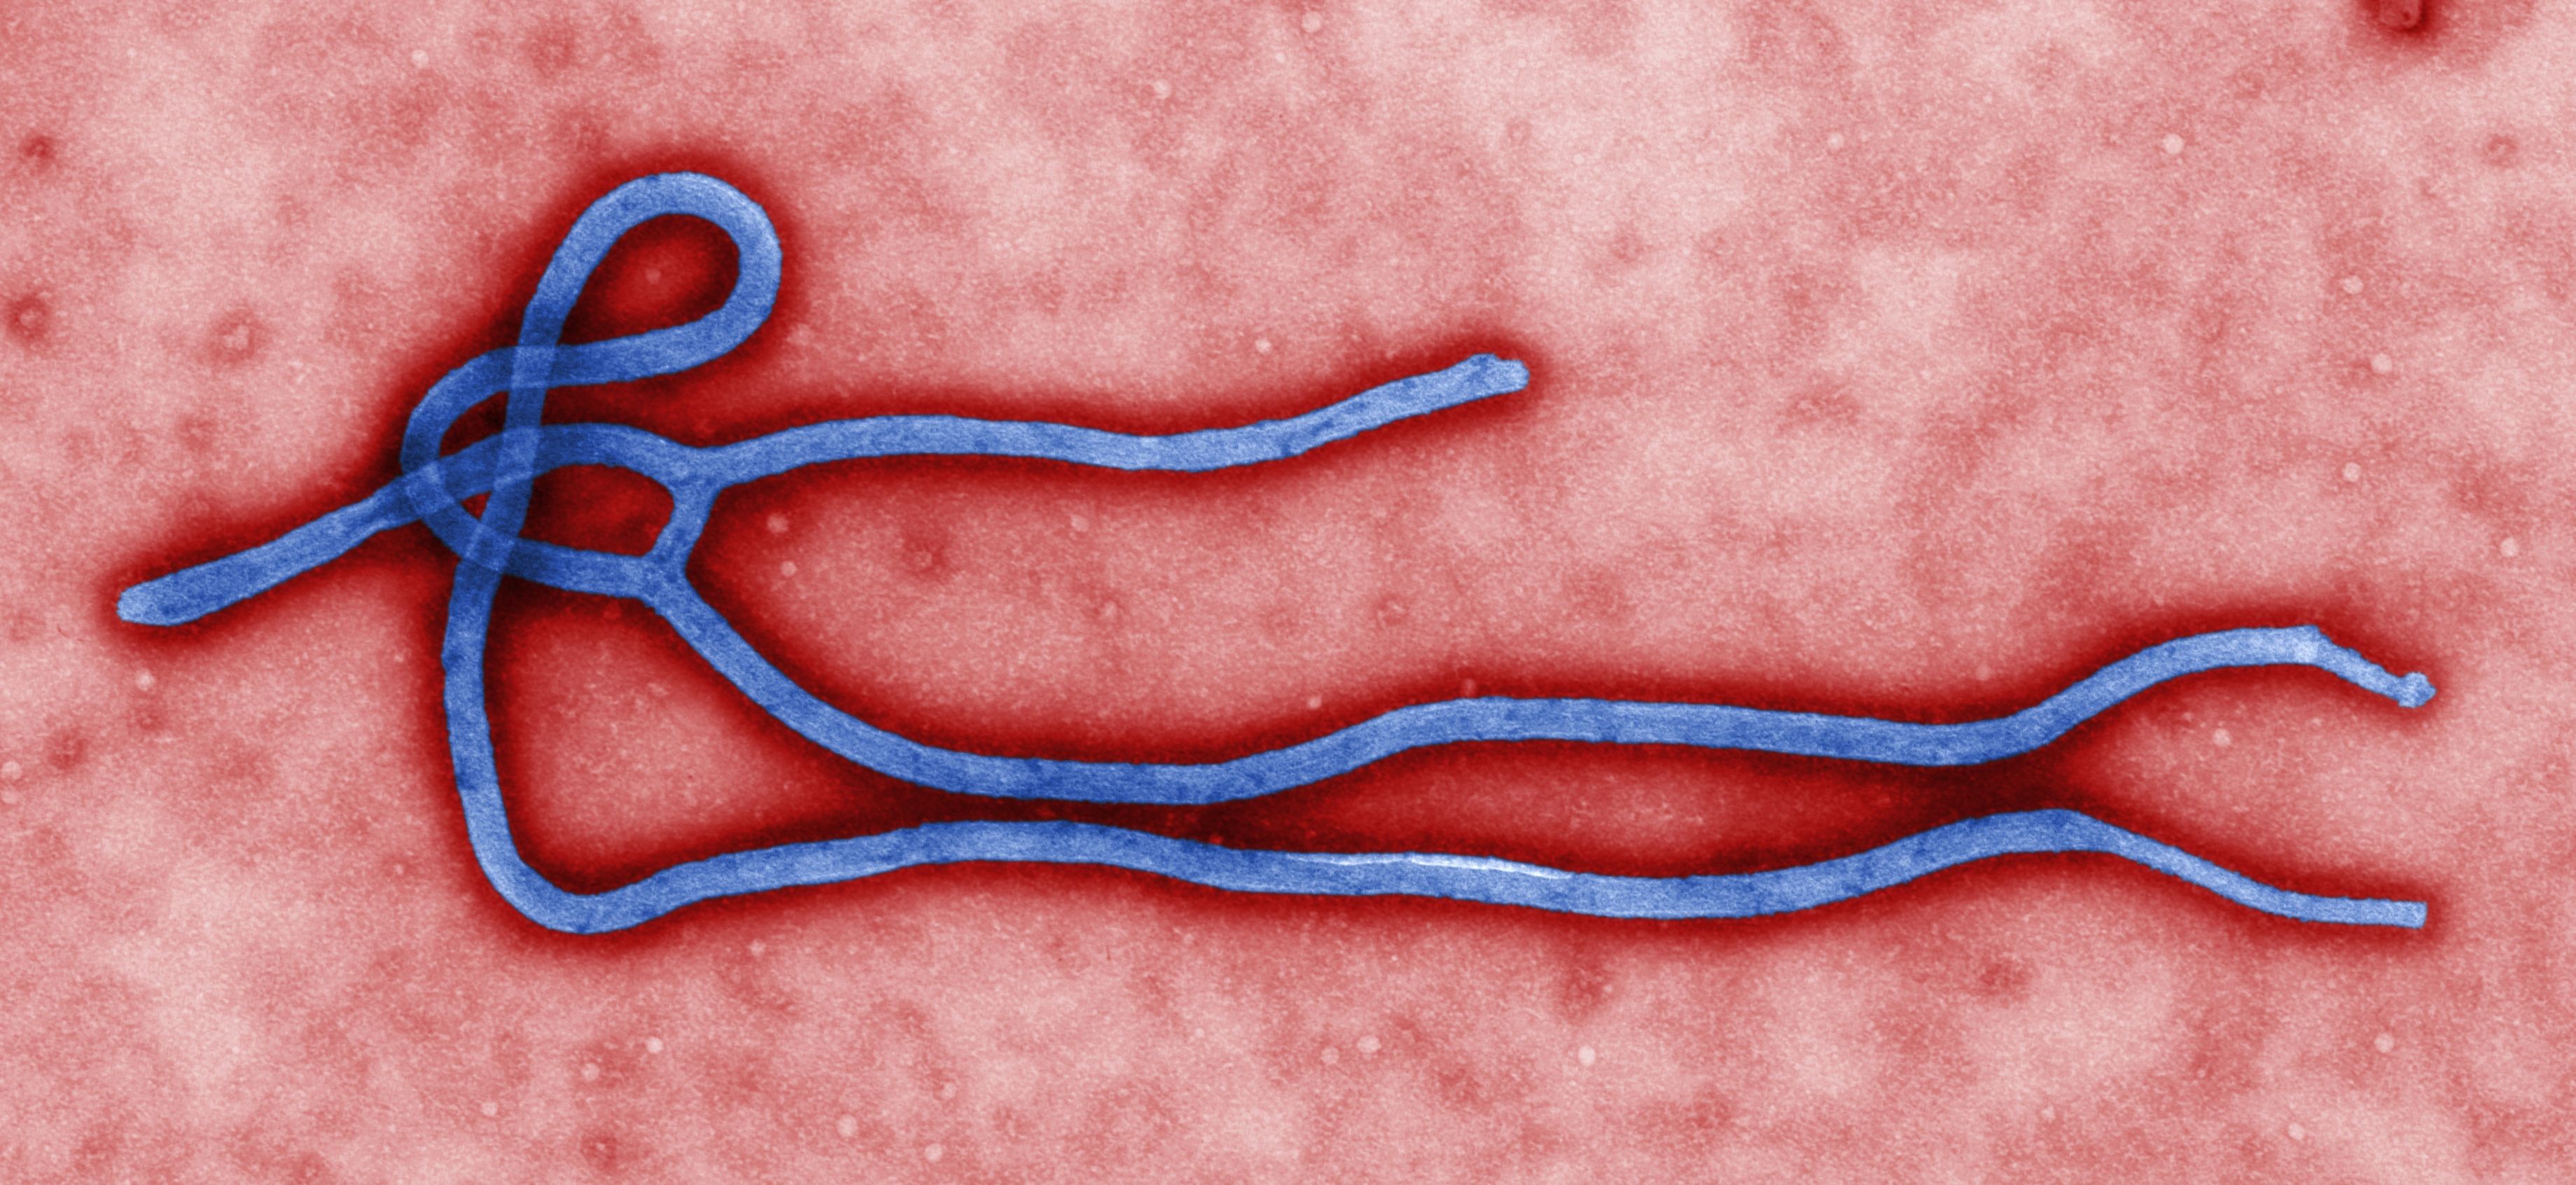 O virião do Ebola (Foto: wikimedia commons)